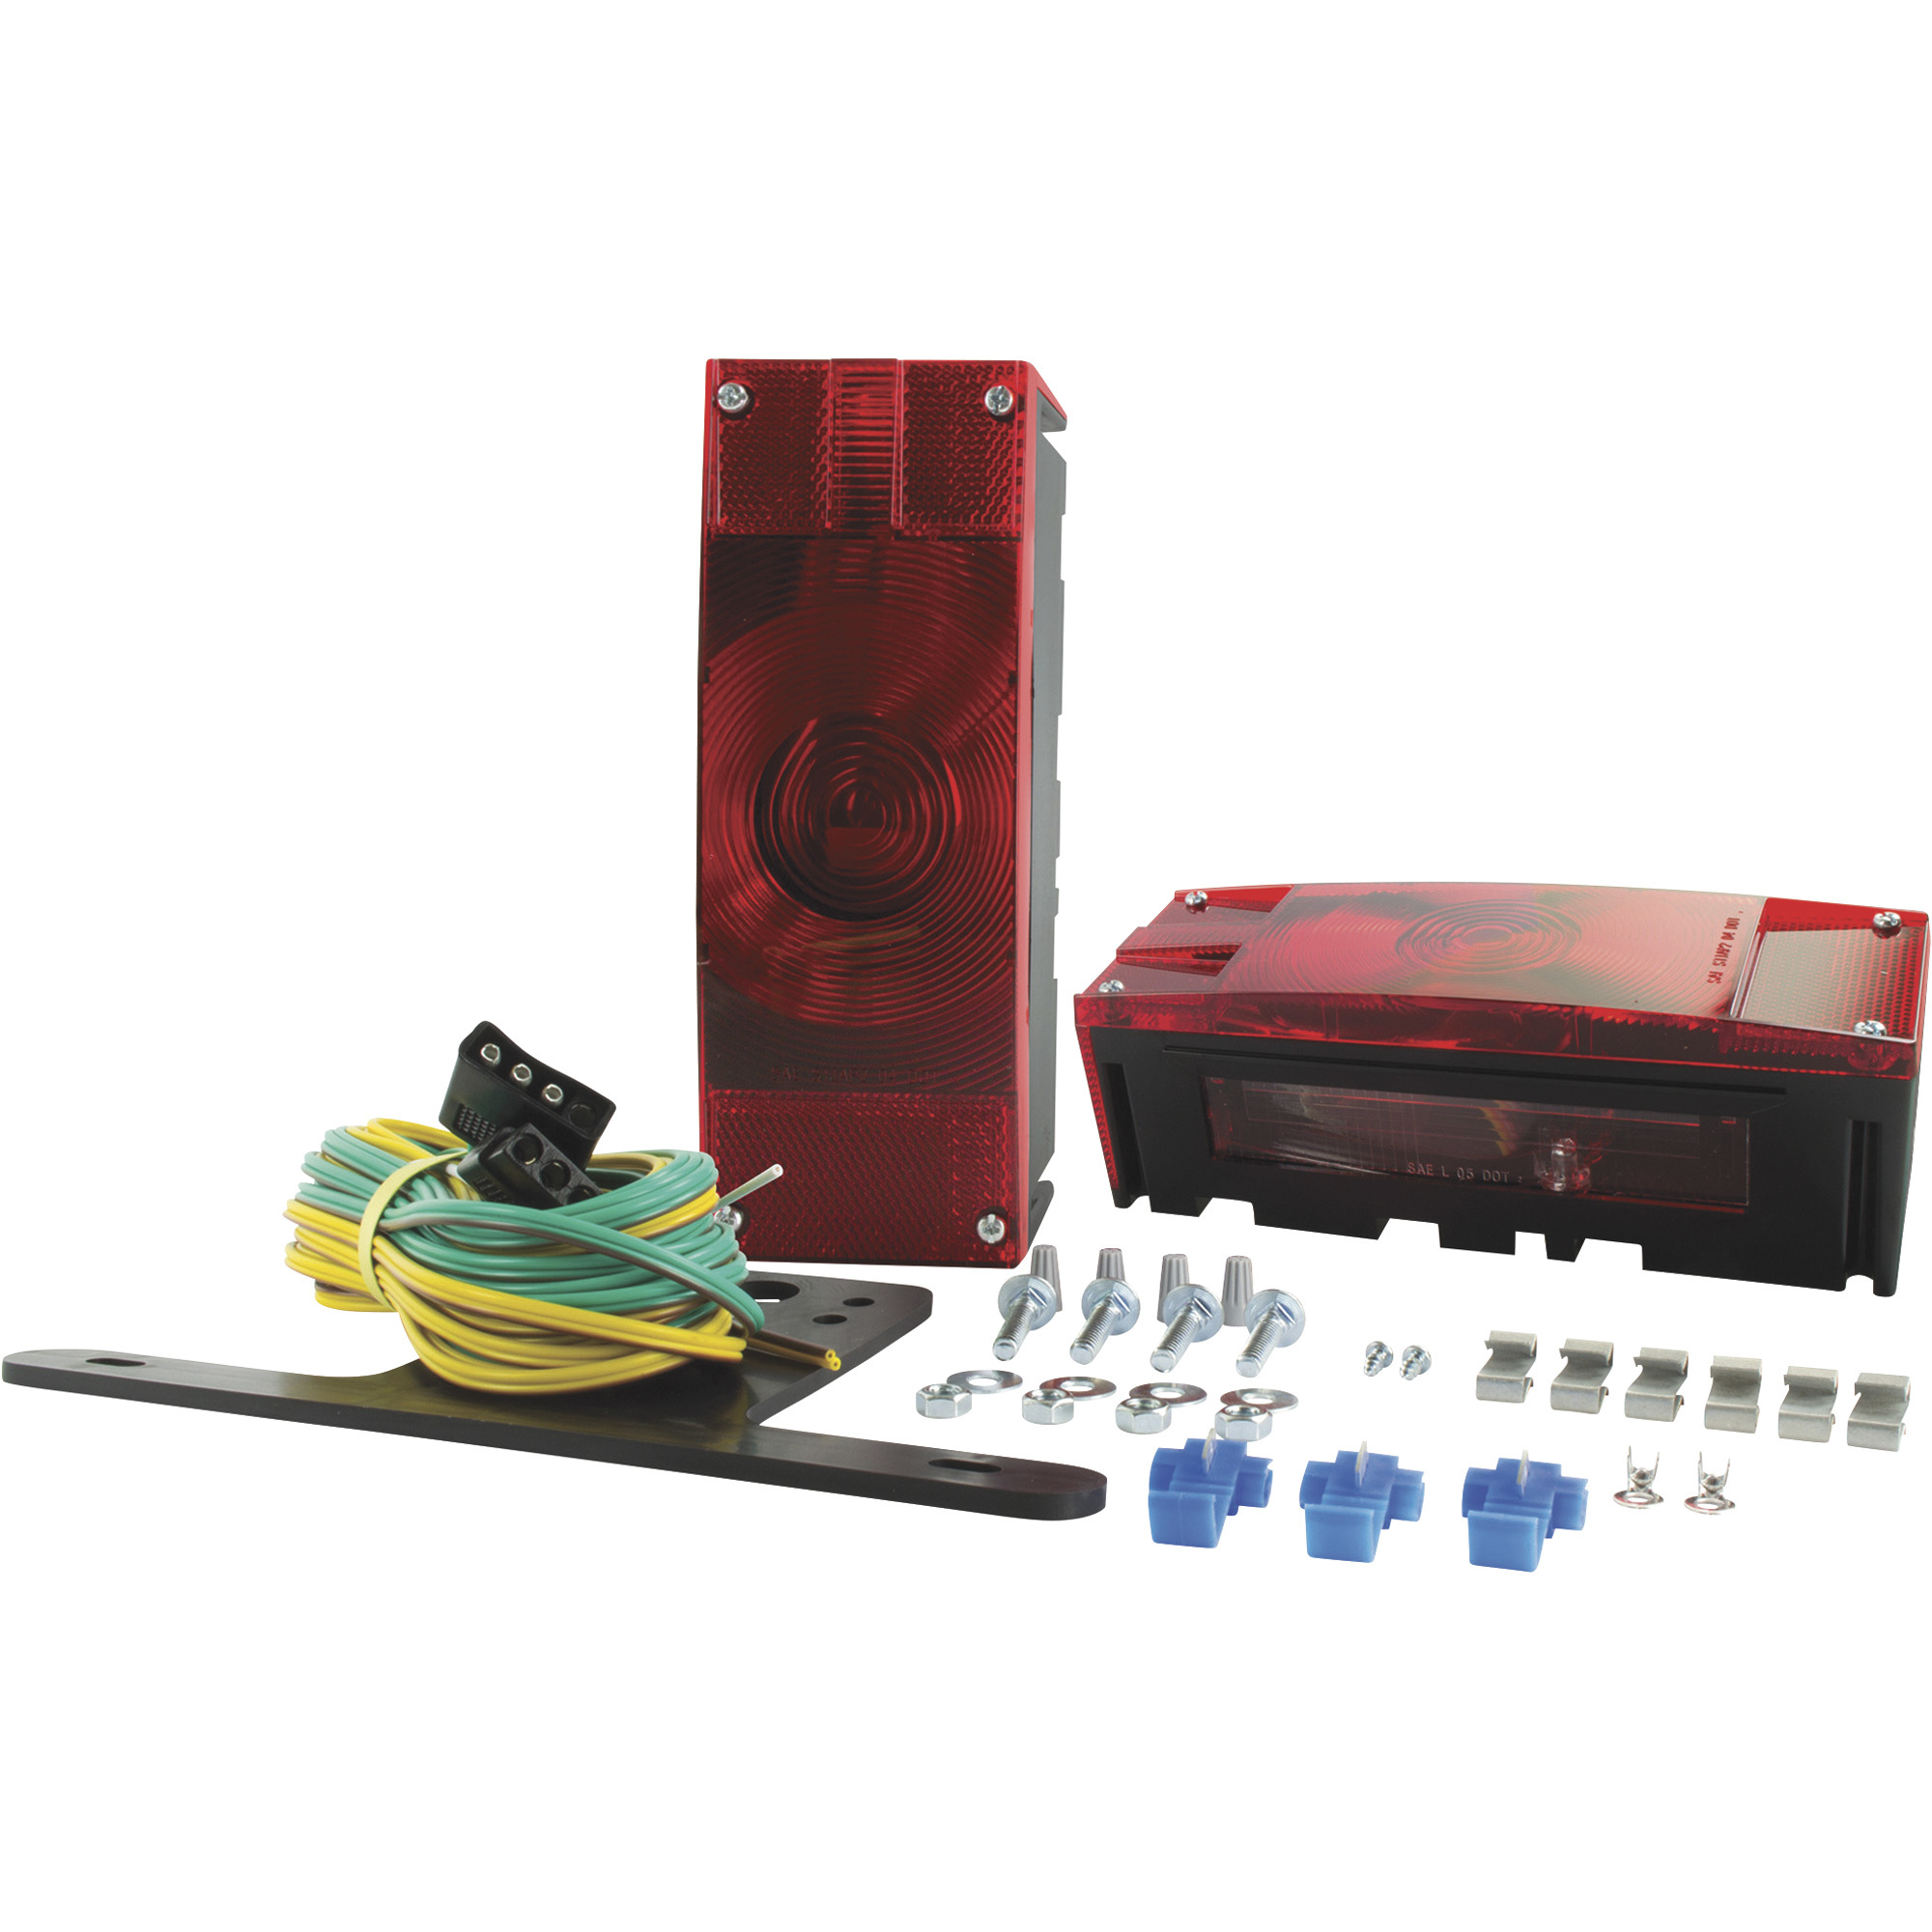 Hopkins Towing Solutions Incandescent Low-Profile Trailer Light Kit, Model C6288